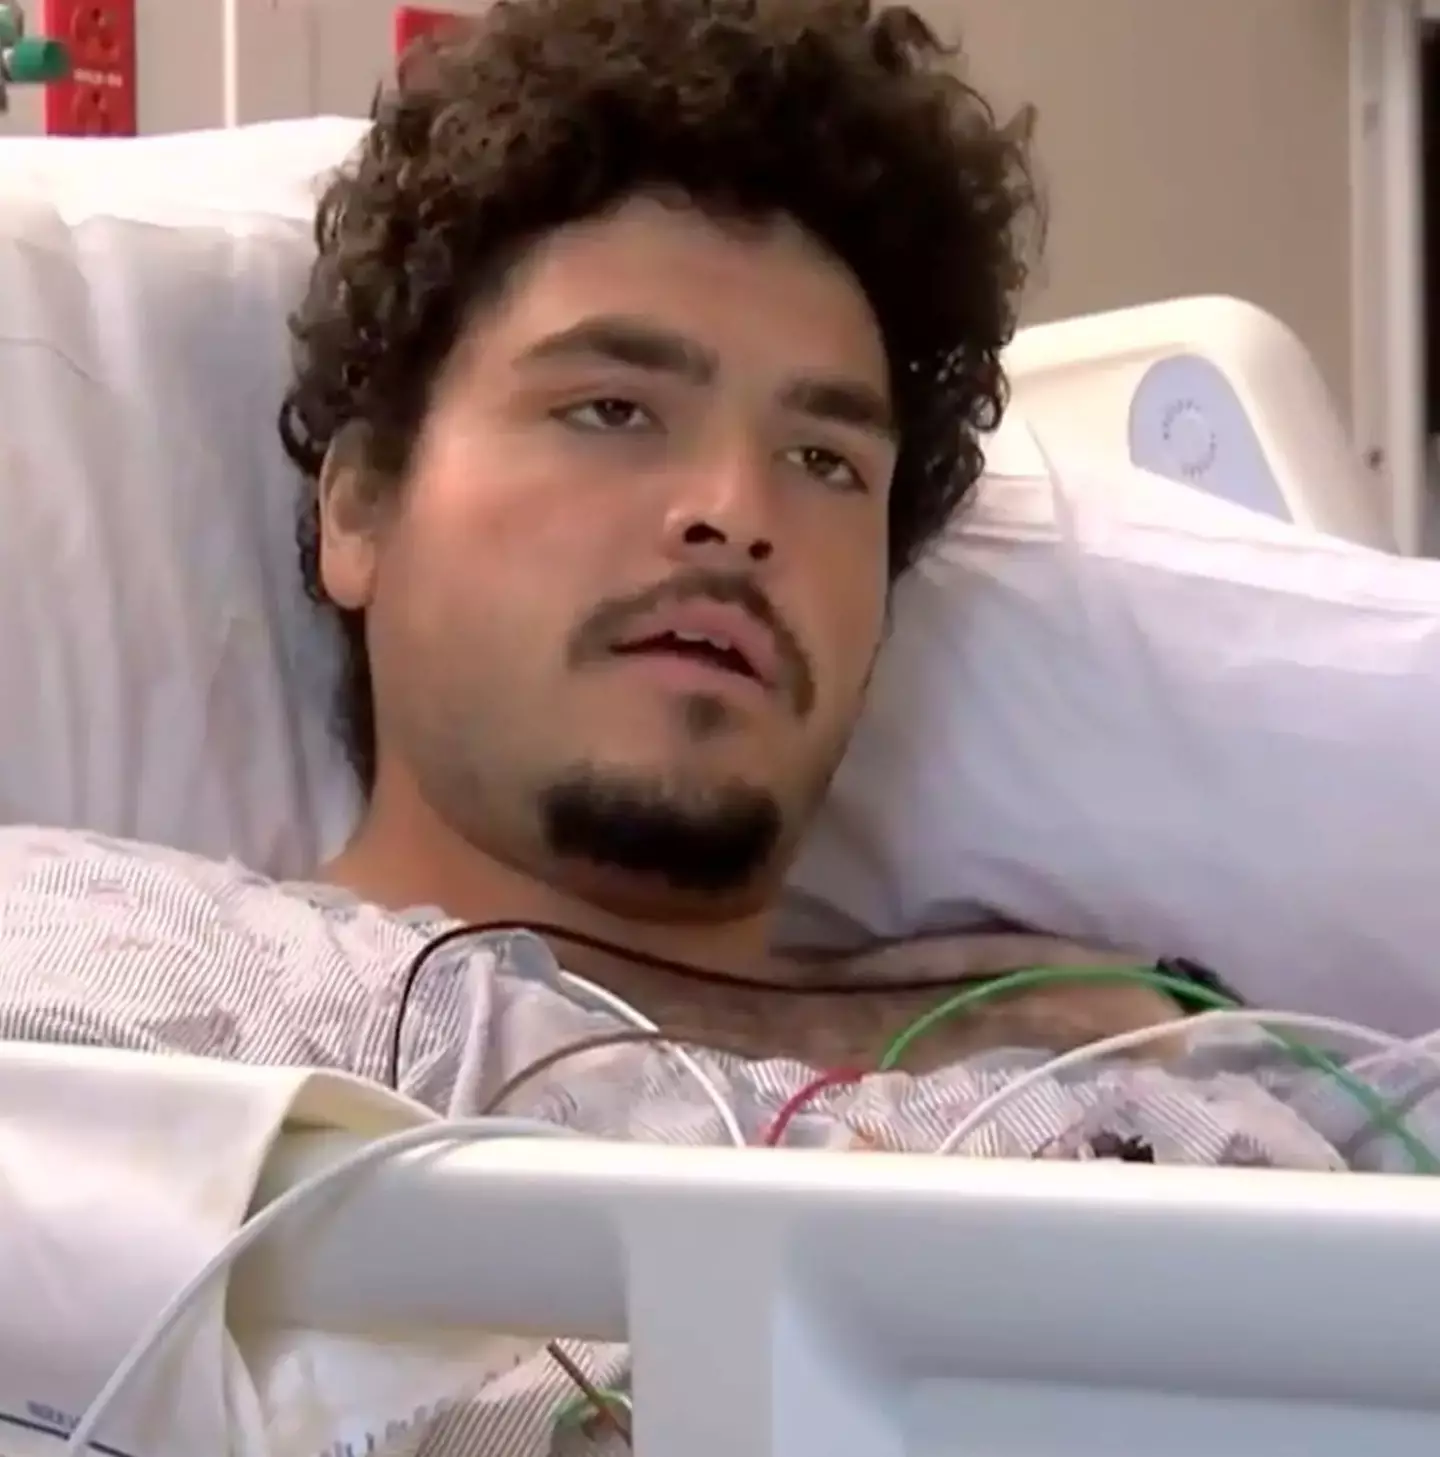 Jordan Rivera lost his arm following a gator attack.